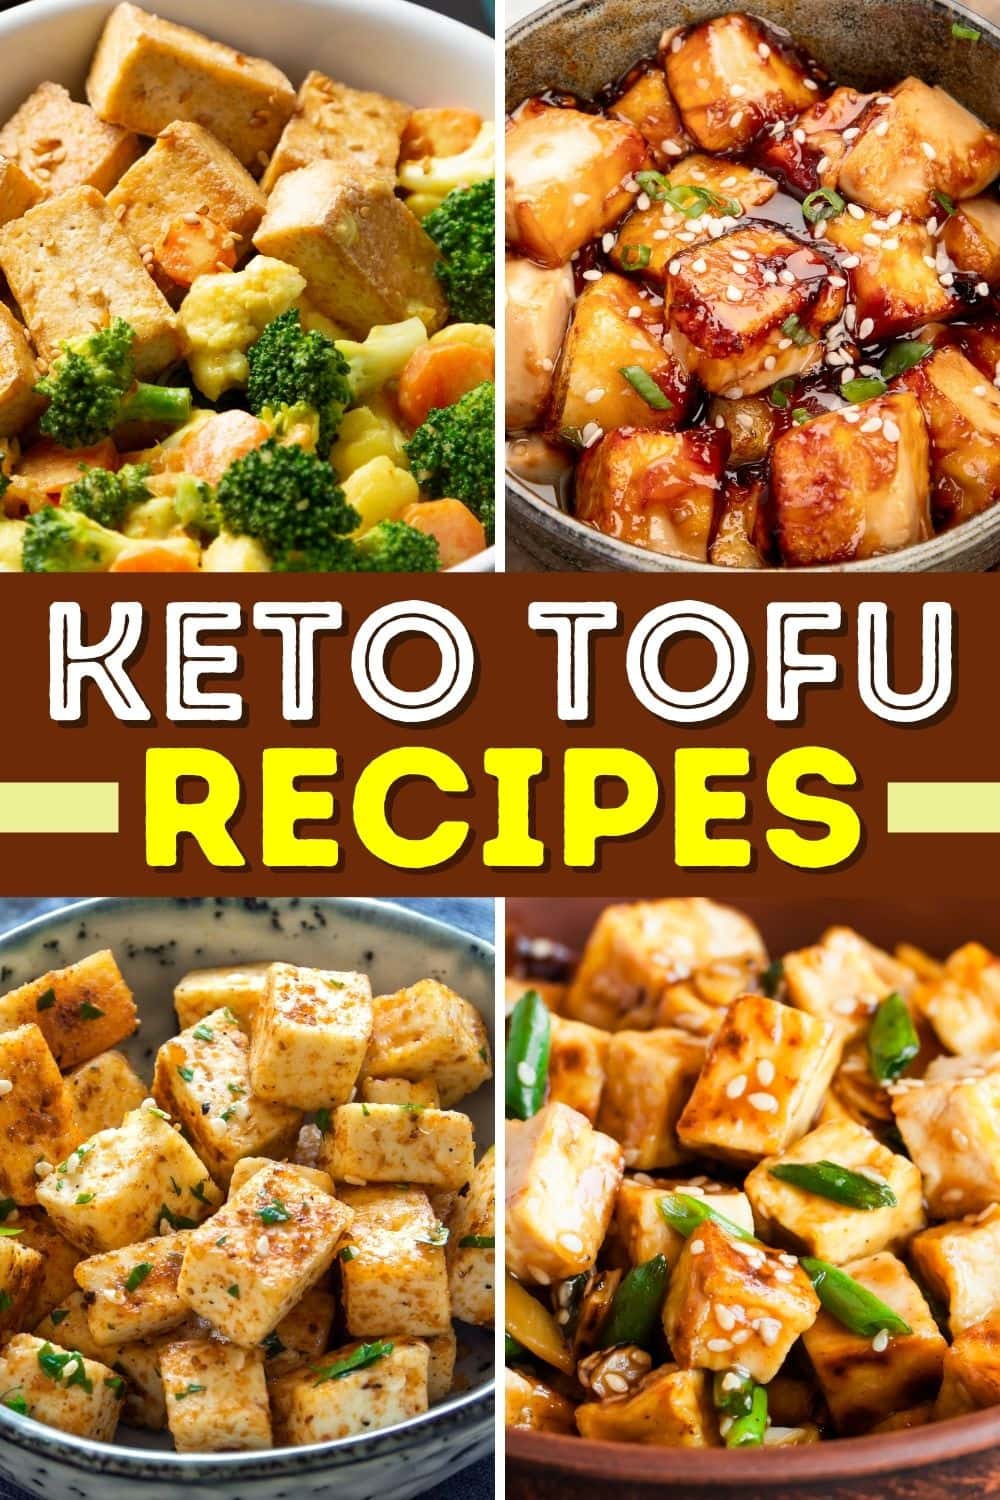 10 Keto Tofu Ezi ntụziaka (+ Efere obere Carb dị mfe) - El Comensal